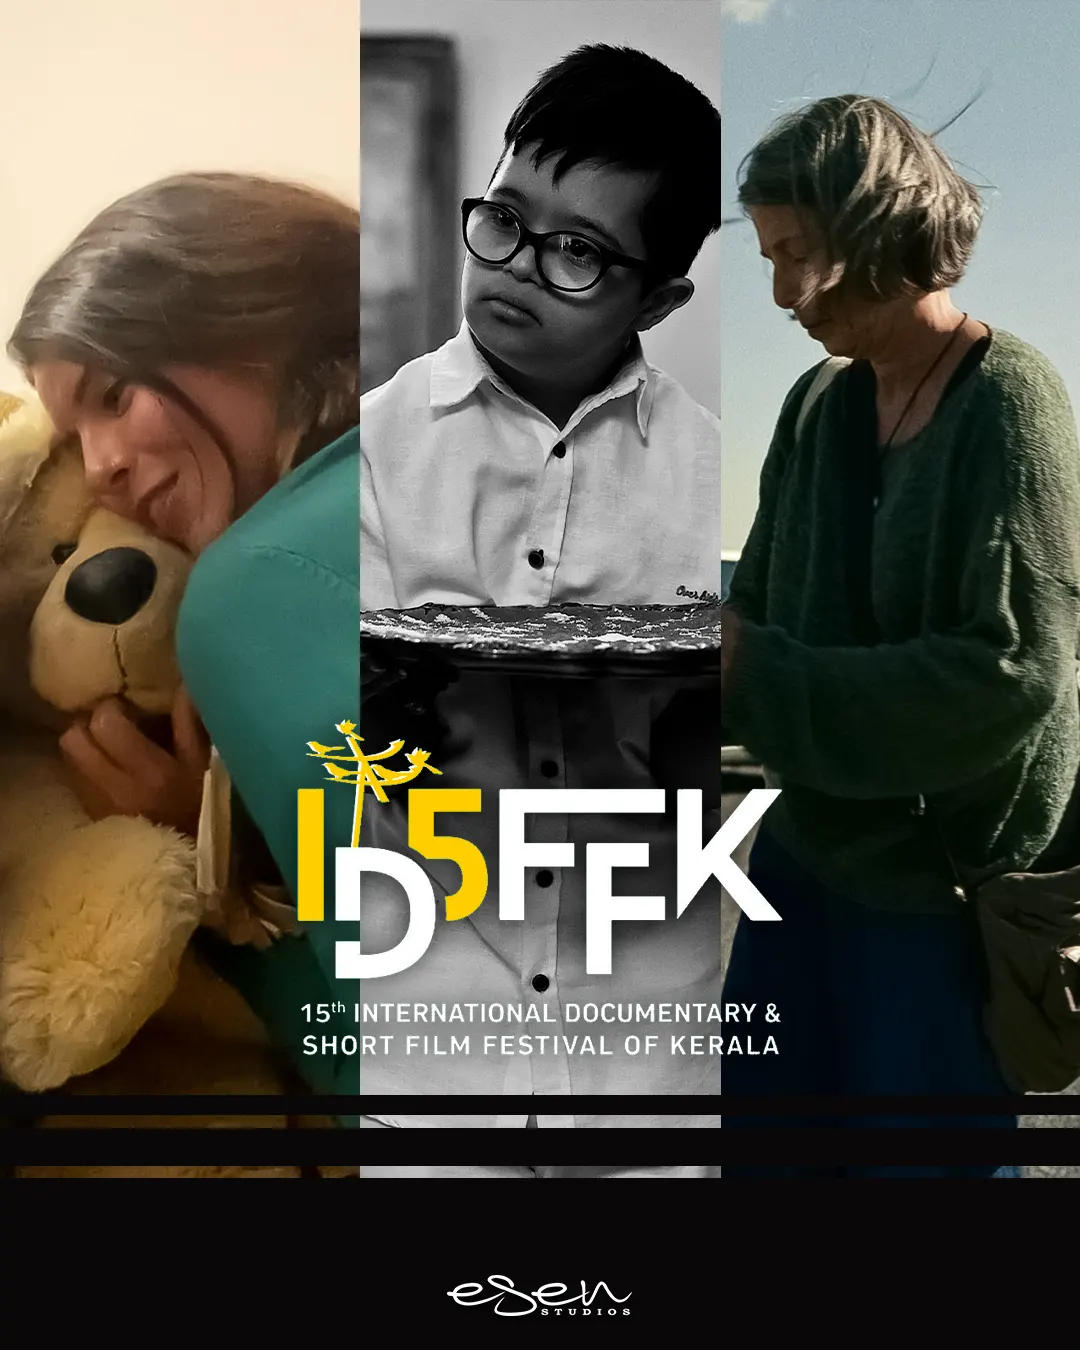 Three short films from Esen Studios distribution at the 15th IDSFFK